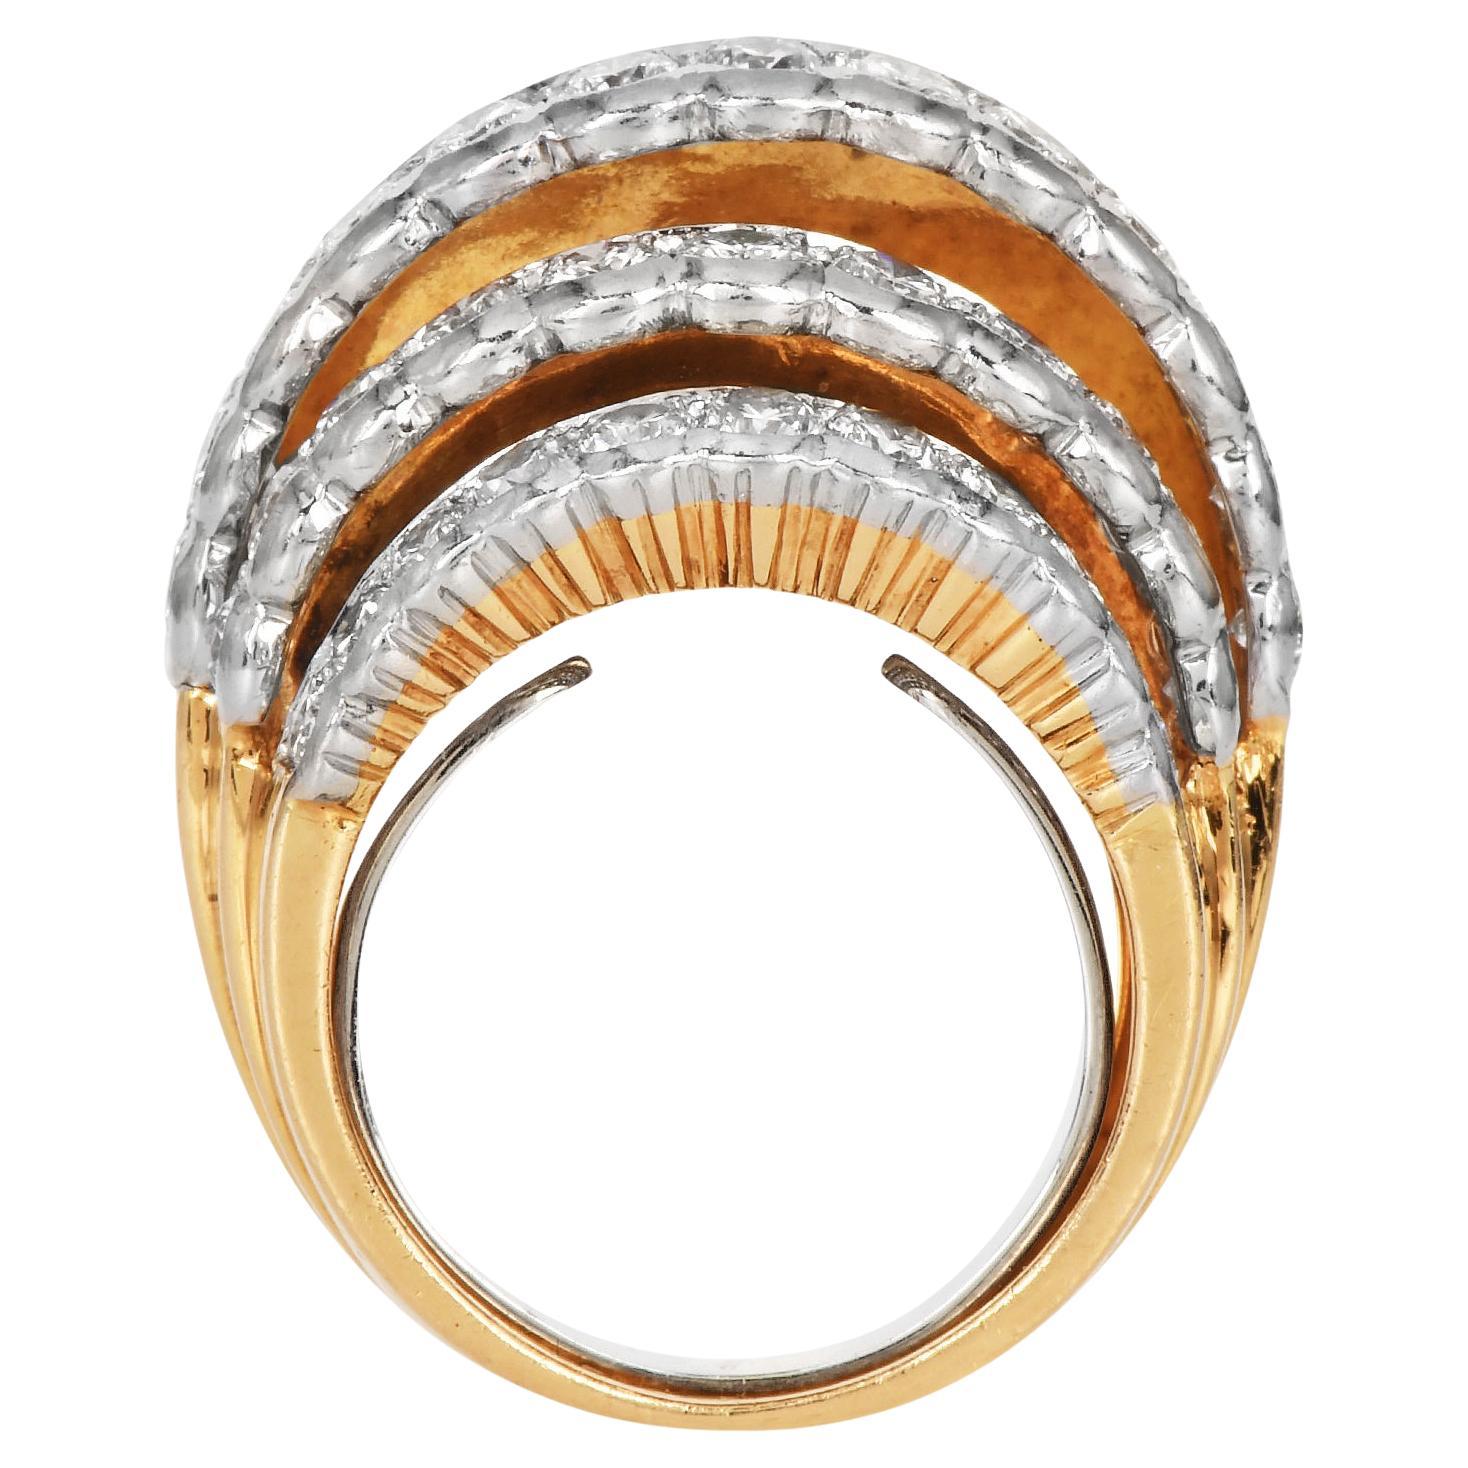  Cartier Paris Vintage Diamond 18K Gold Stepped Cocktail Ring For Sale